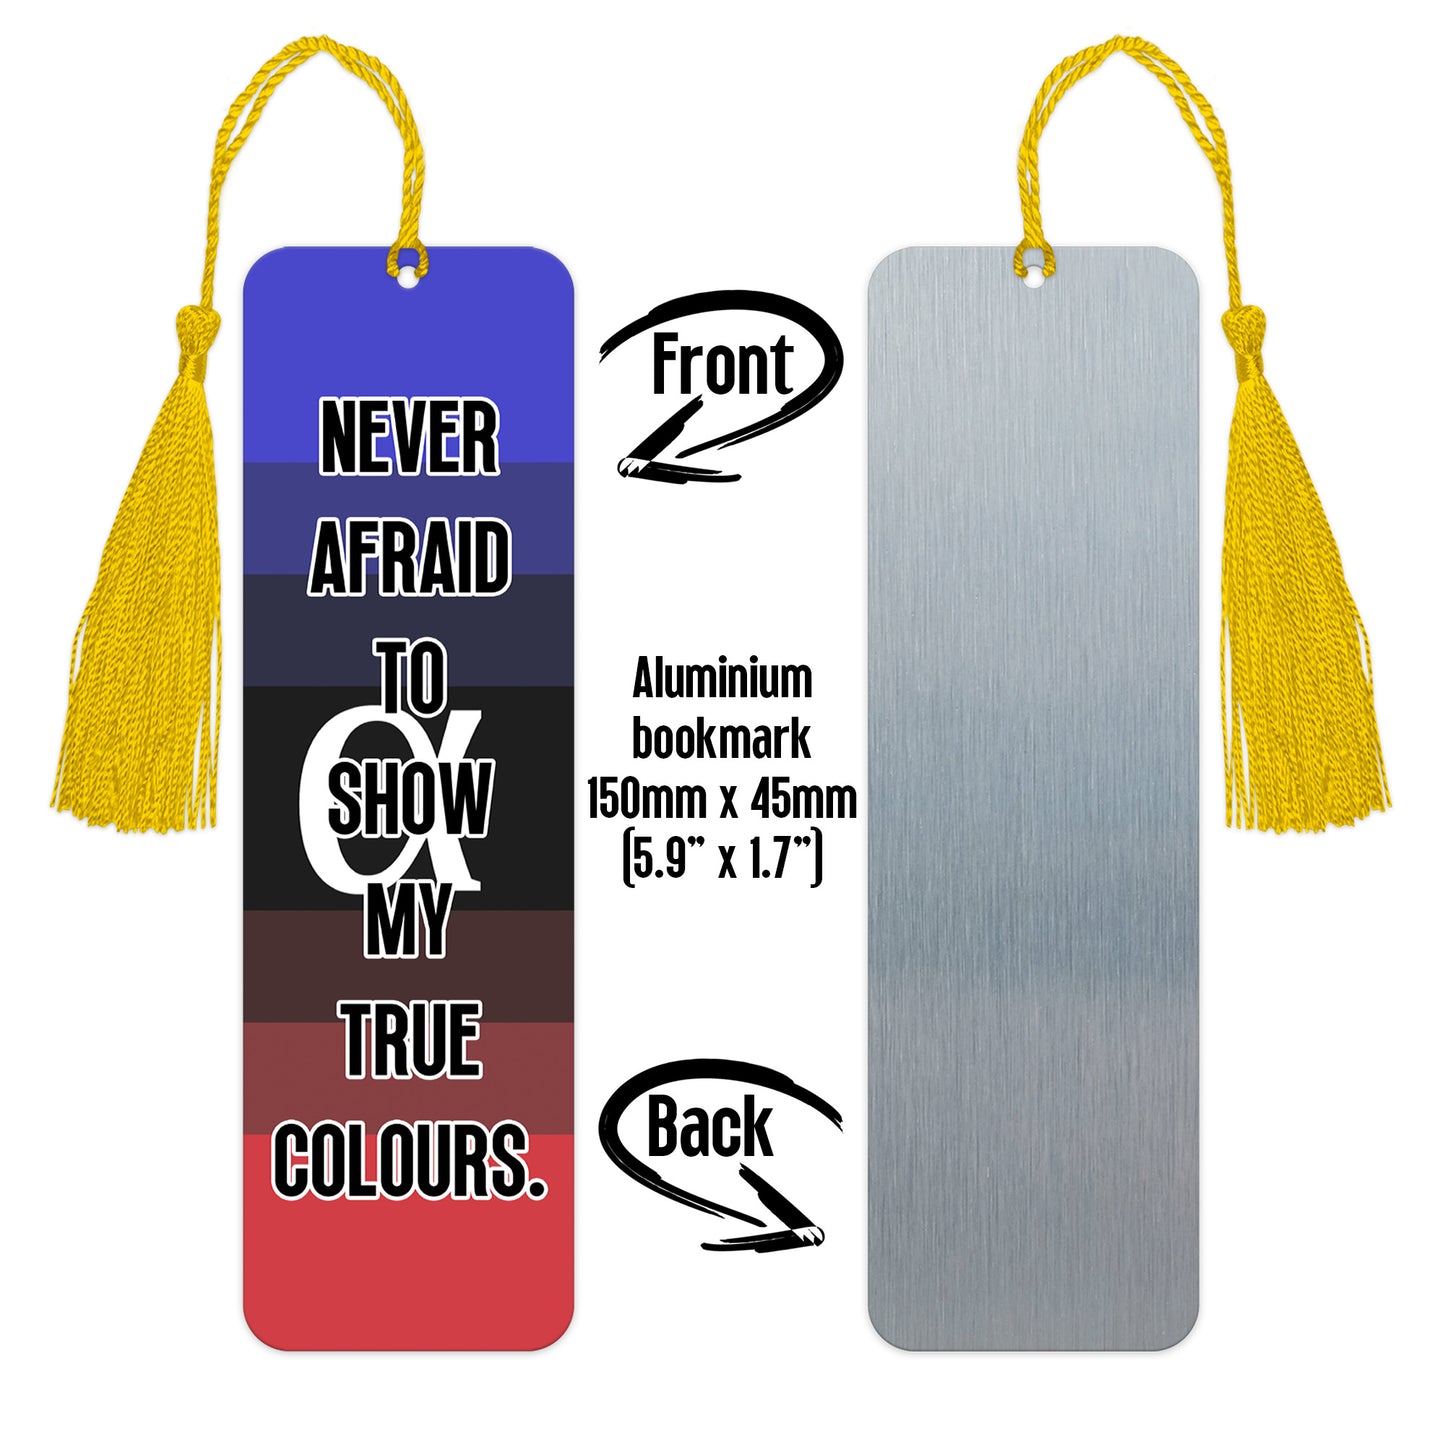 Ambiamorous pride luxury aluminium bookmark never afraid to show my true colours